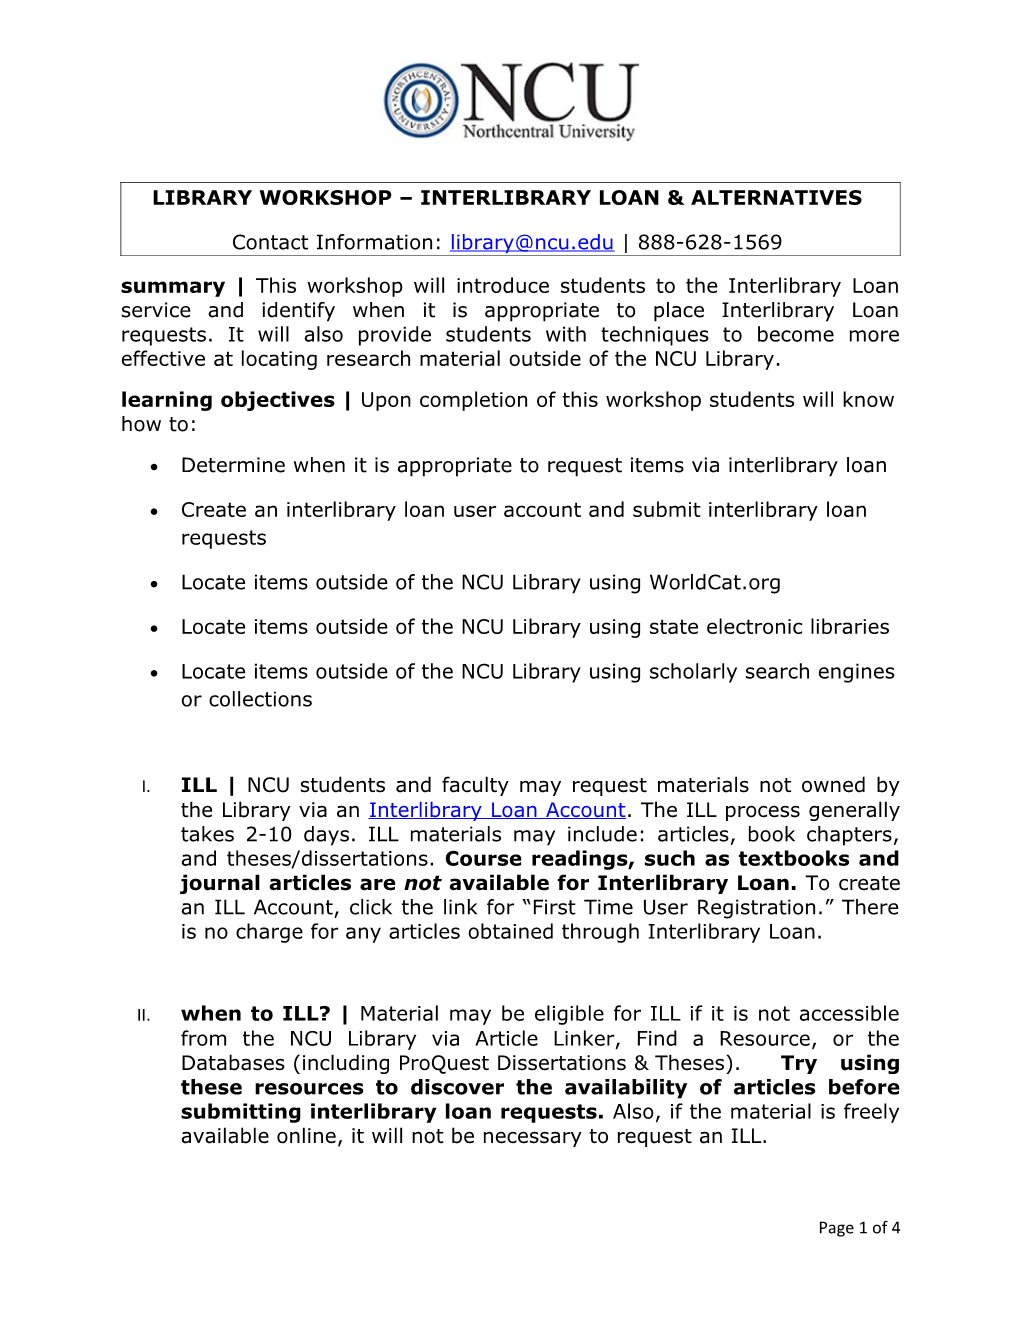 Library Workshop Interlibrary Loan & Alternatives